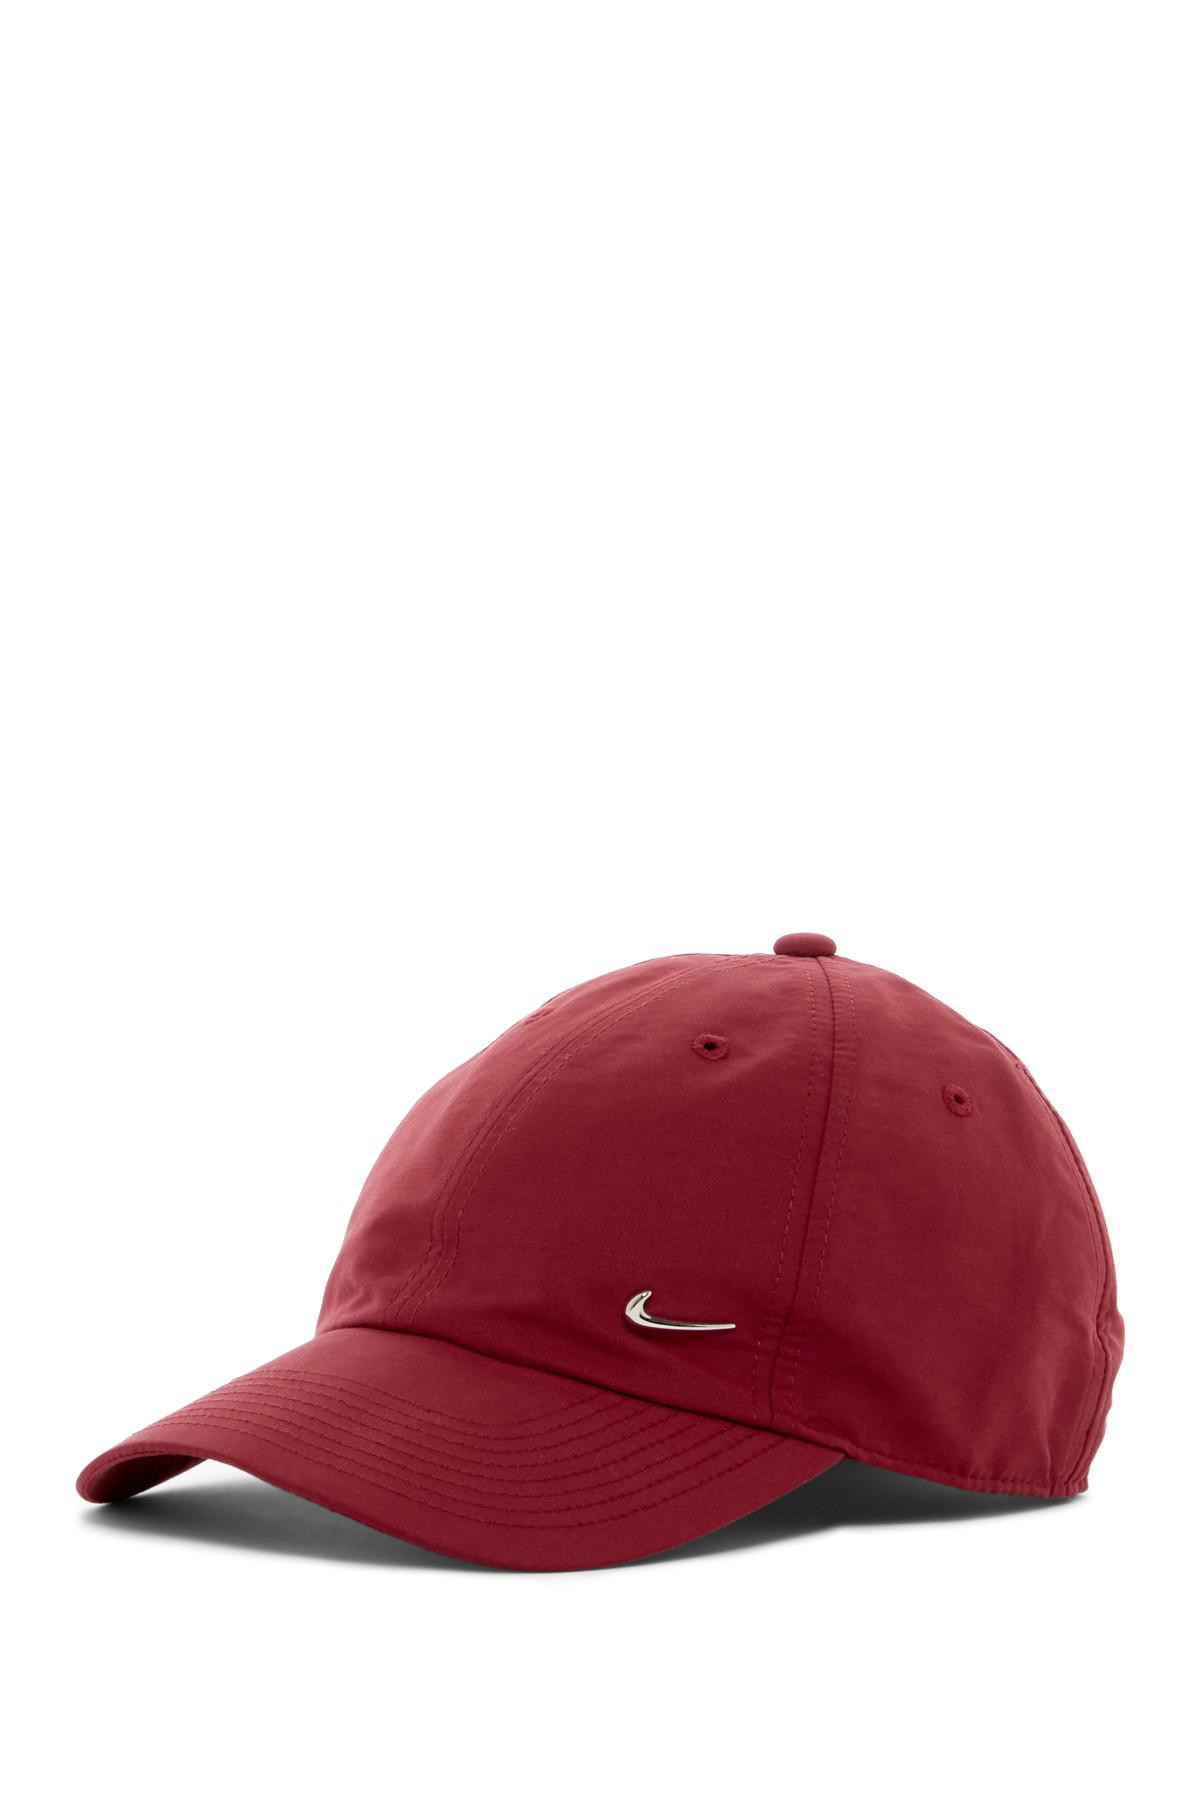 Nike Synthetic Metal Swoosh Cap in Red - Lyst